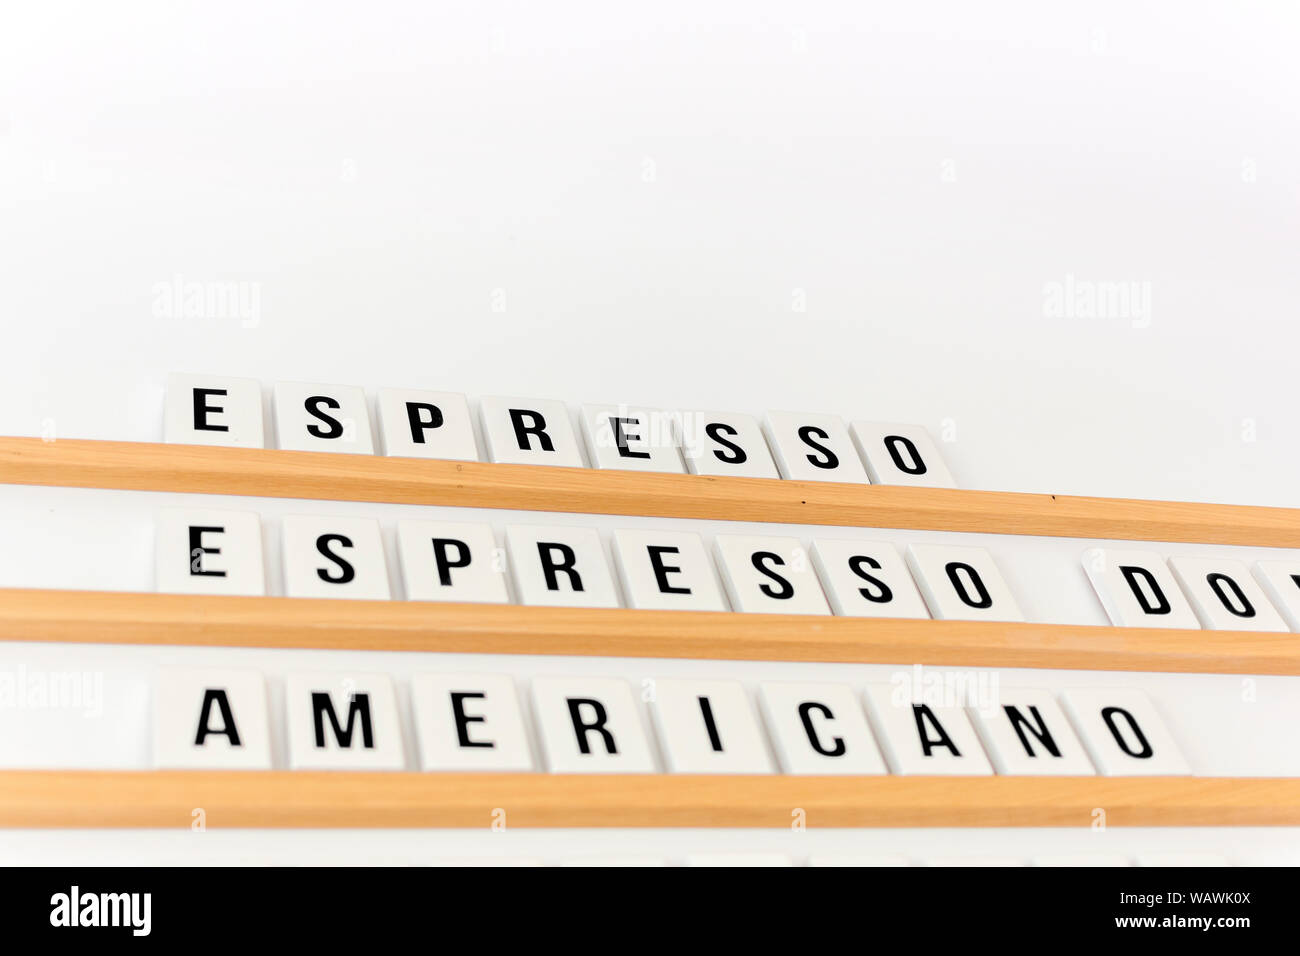 Coffee shop menu board with focus on espresso Stock Photo